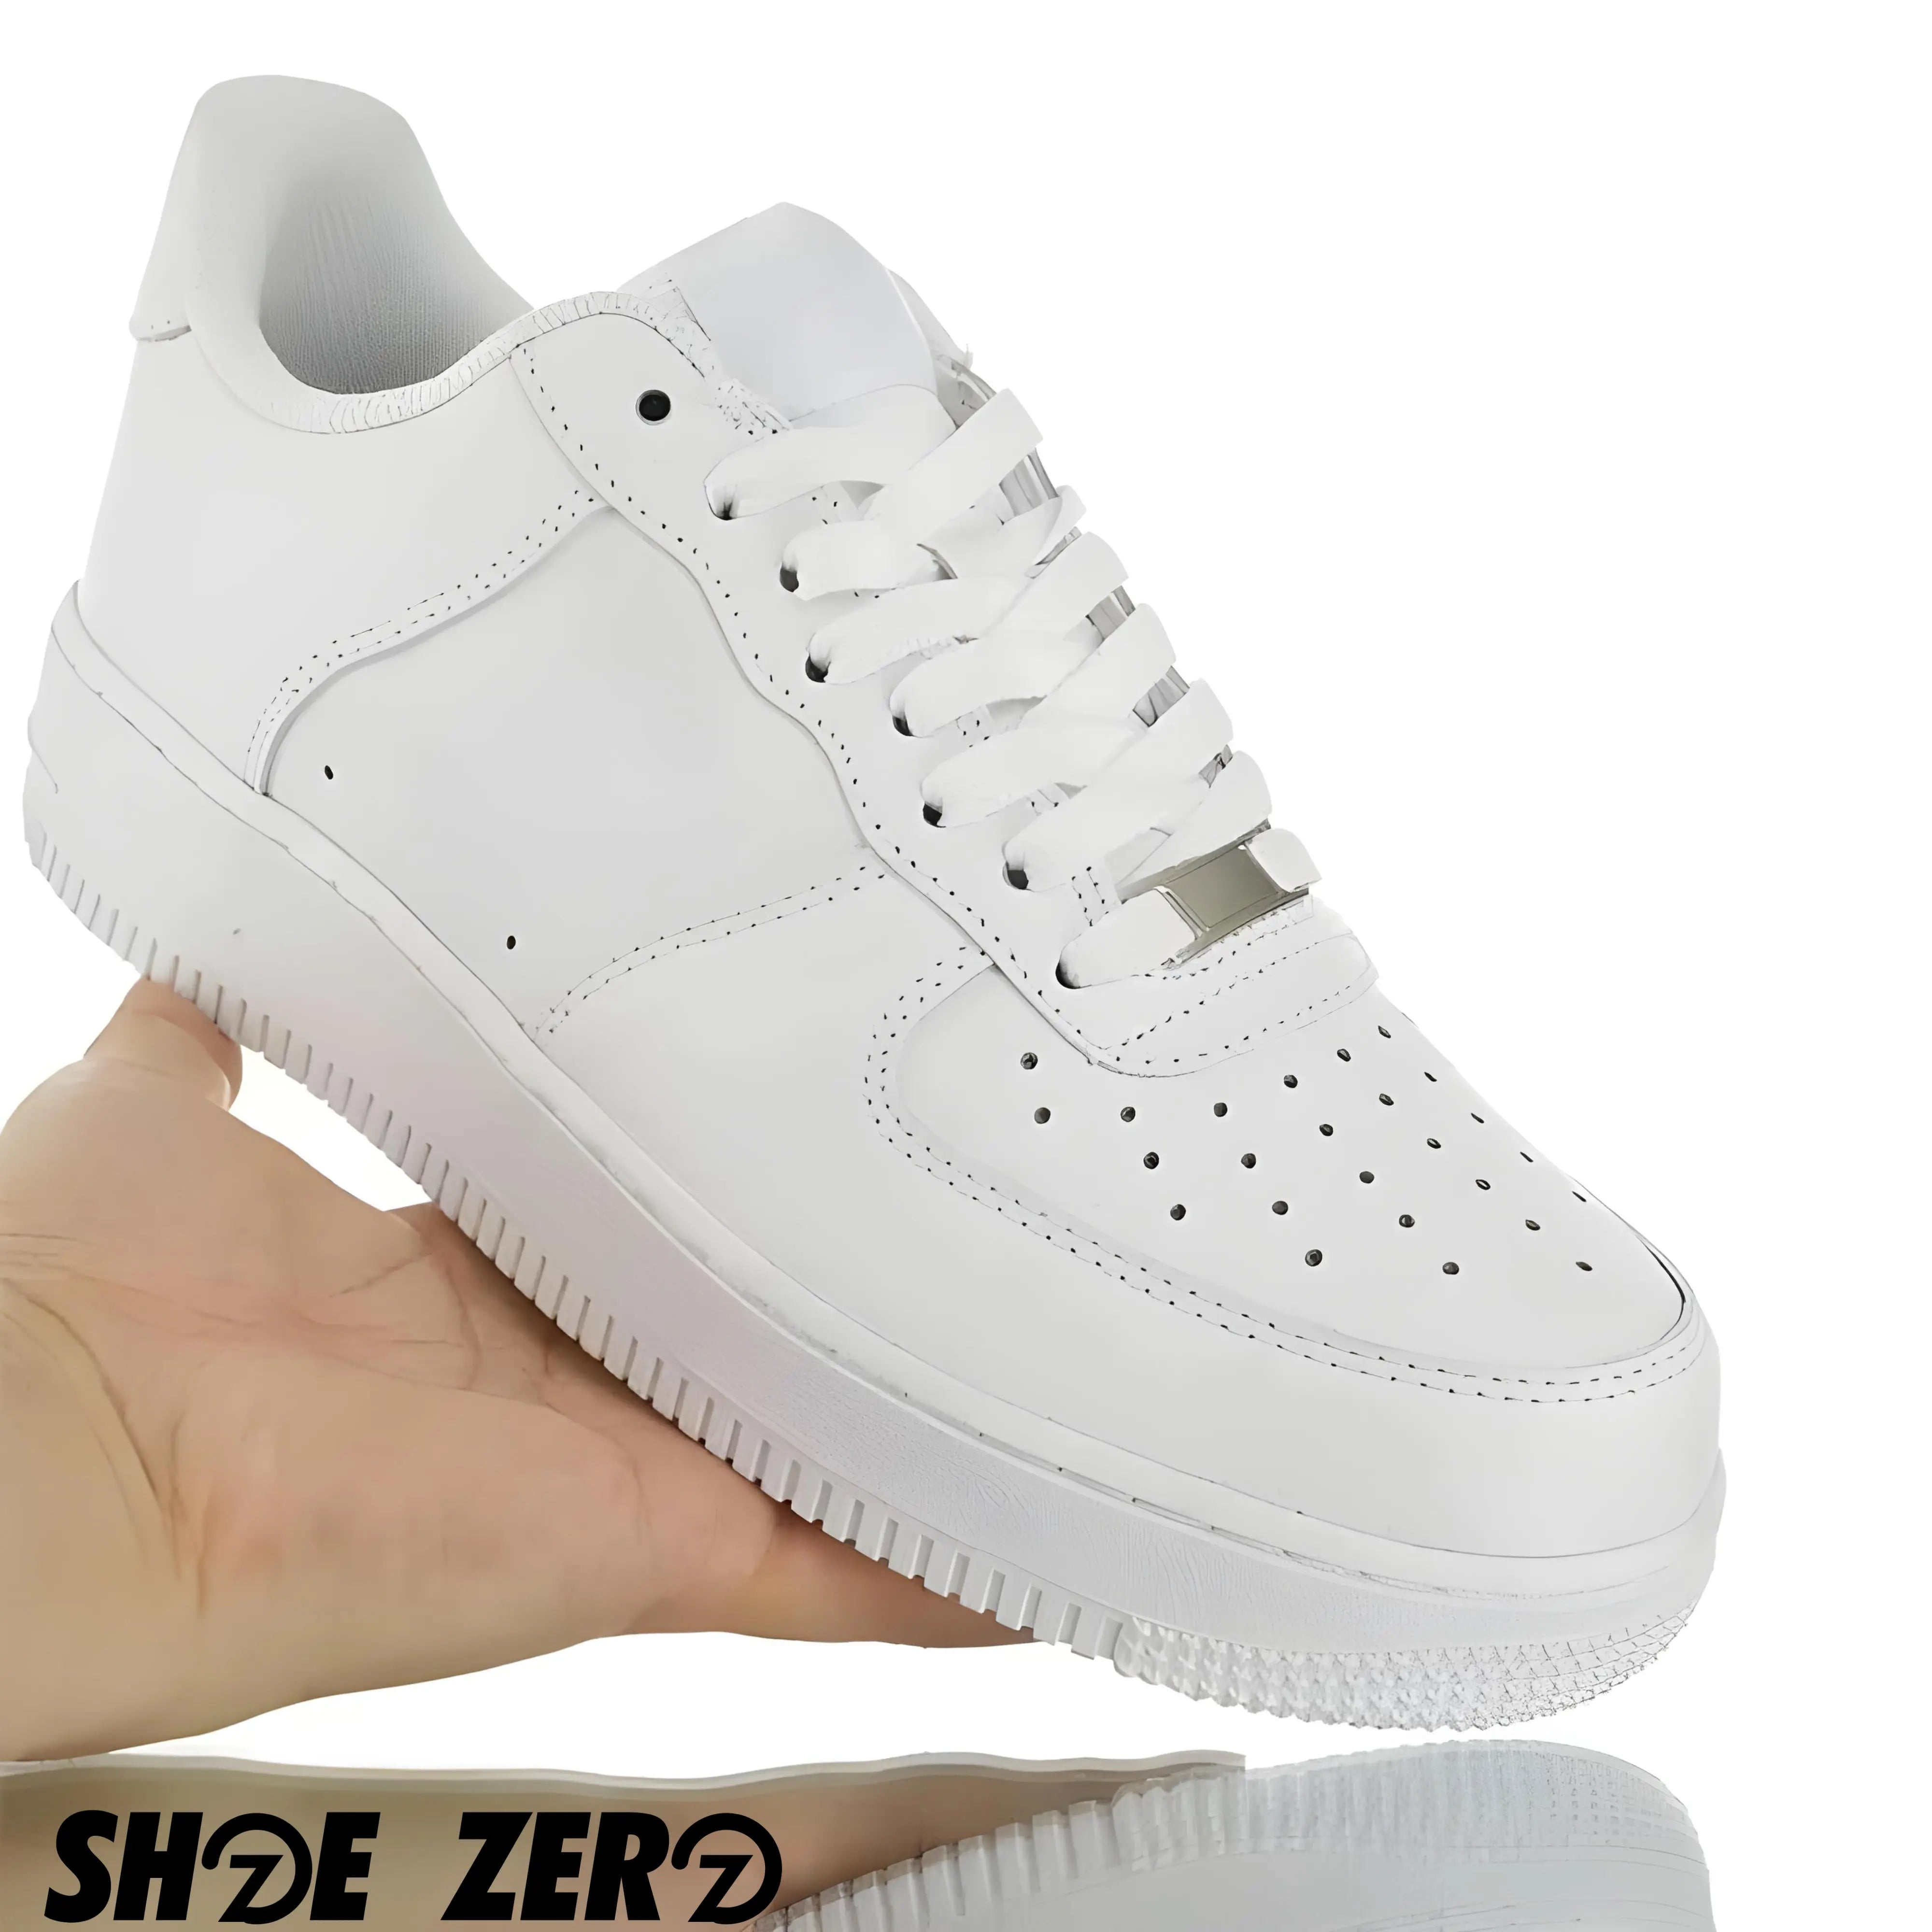 Customizable Air-Force Zeros | Design your own Low Top | Shoe Zero